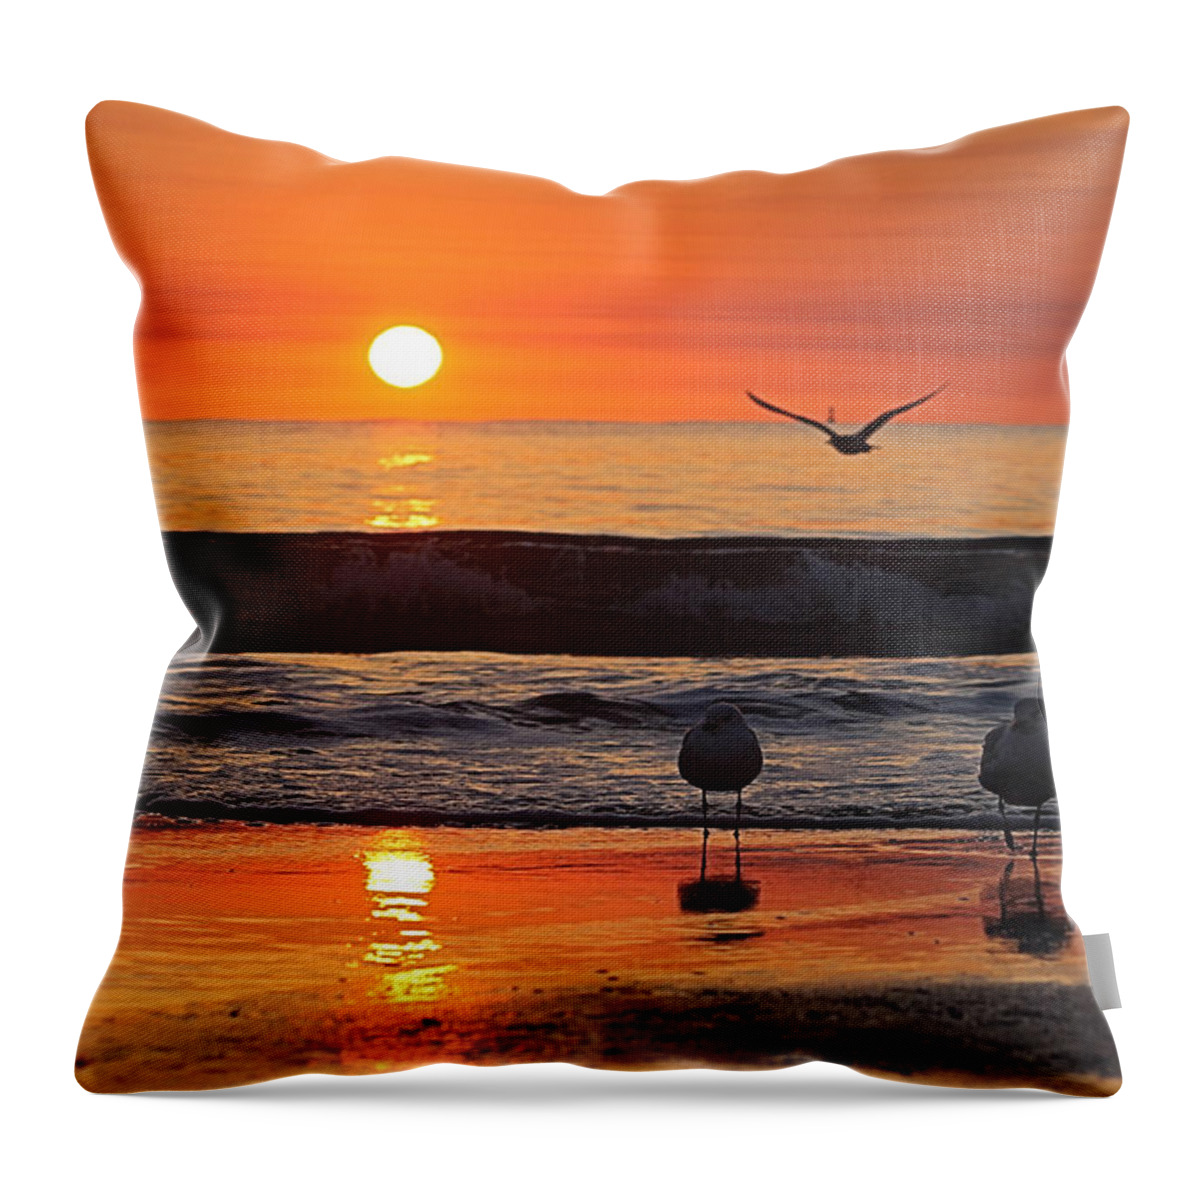 Orange Throw Pillow featuring the photograph Orange Dawn Day by Robert Banach